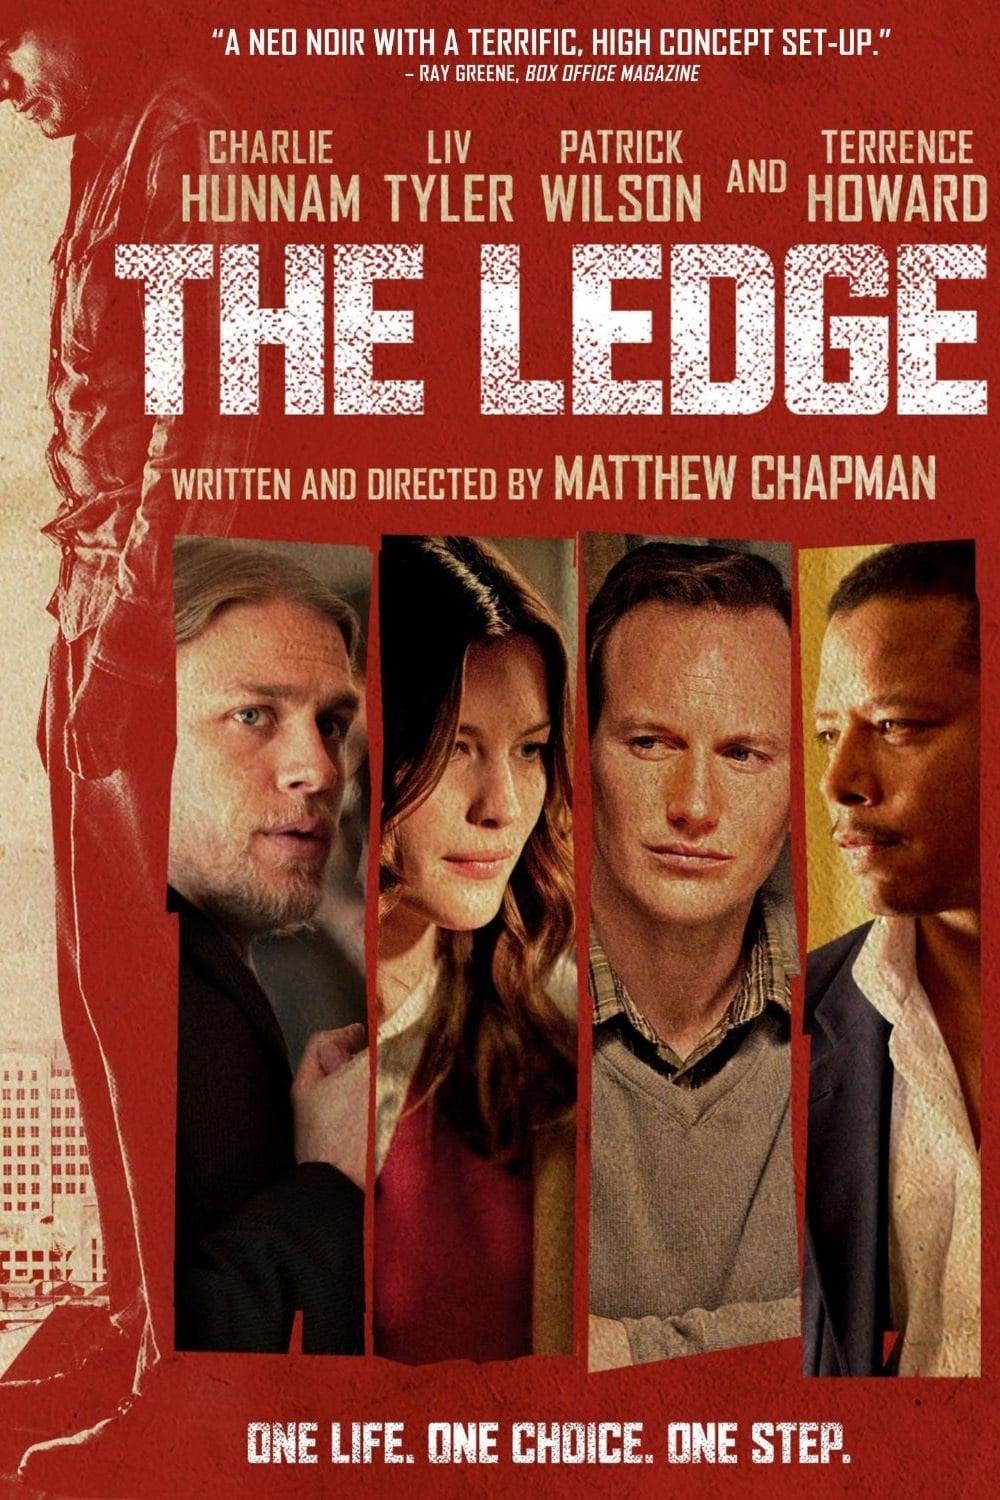 The Ledge poster